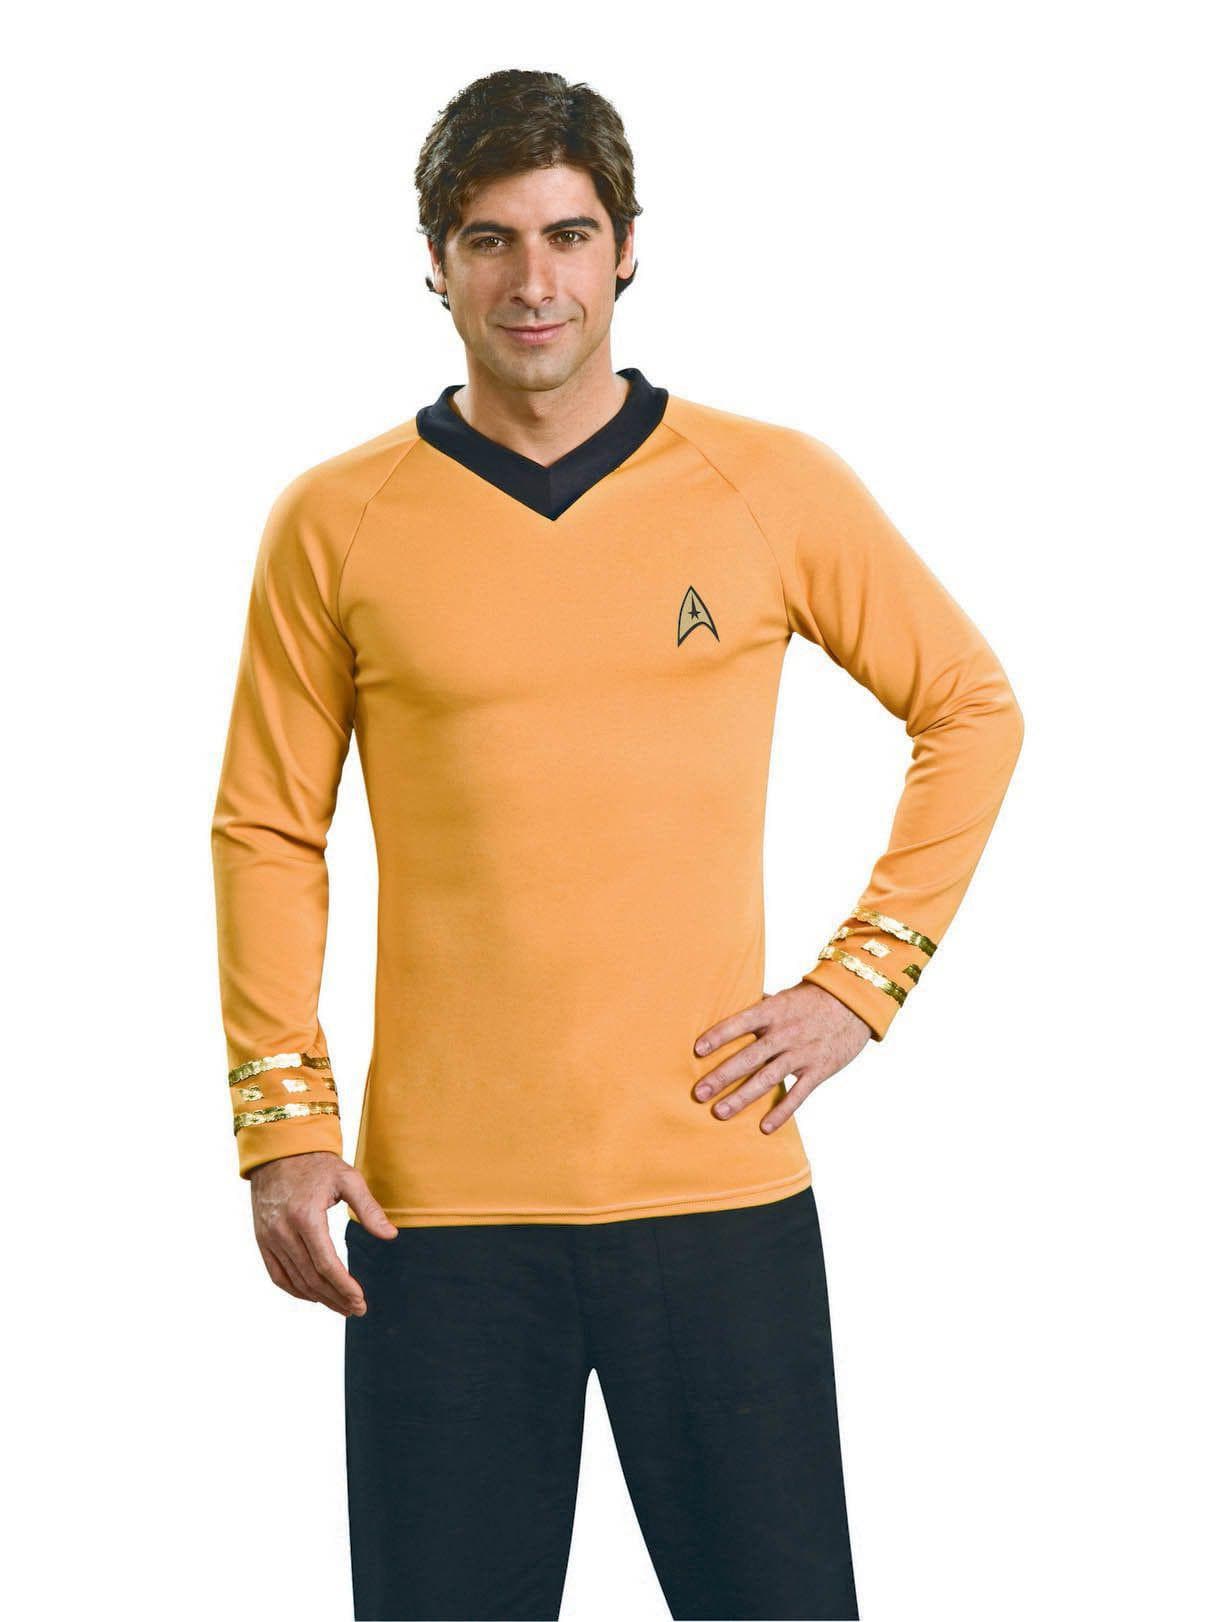 Men's Star Trek Captain Kirk Shirt - Deluxe - costumes.com